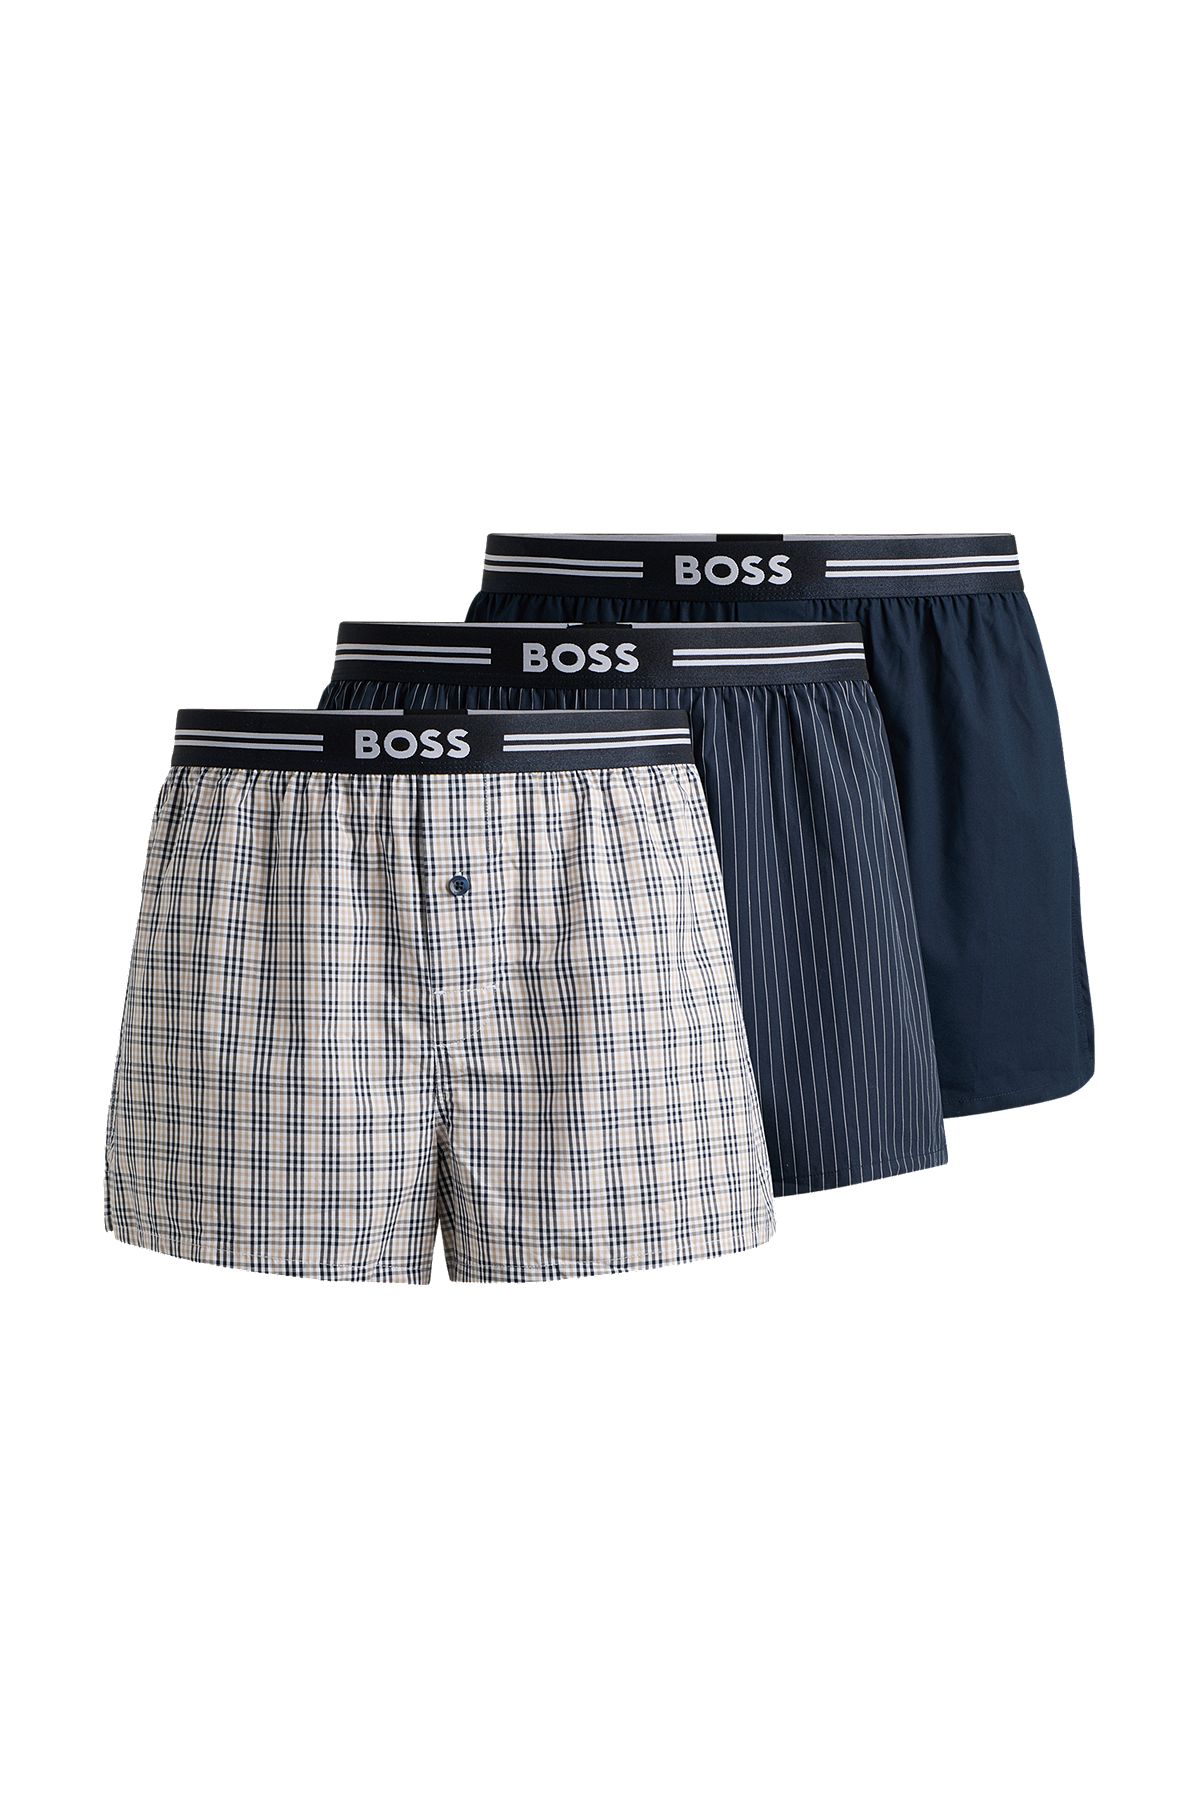 Three-pack of pyjama shorts in cotton poplin, Dark Blue